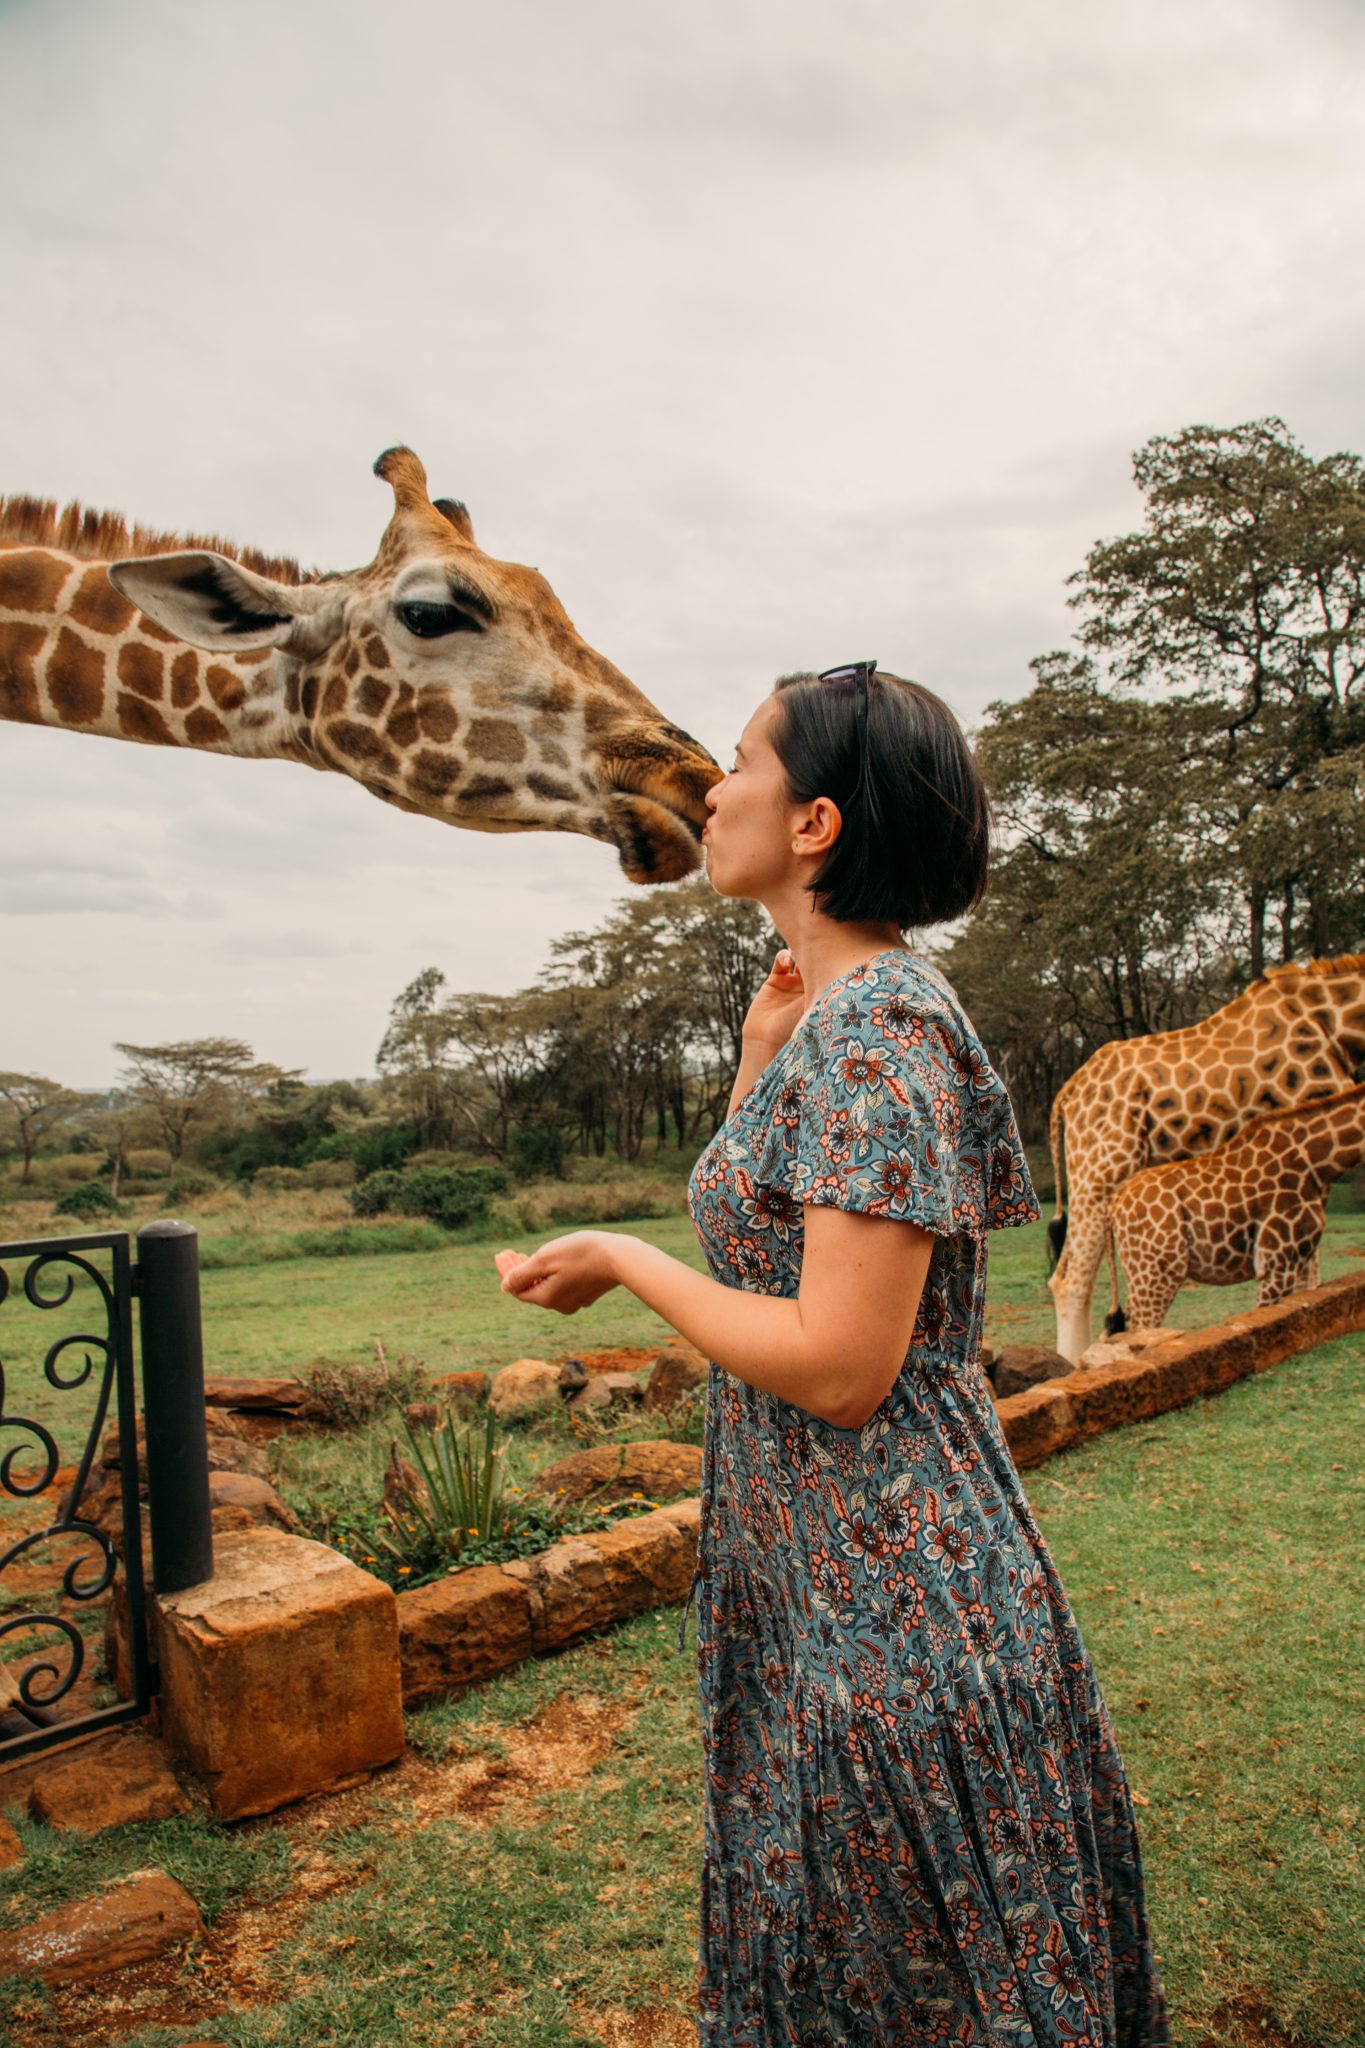 A woman kissing a giraffe at Giraffe Manor